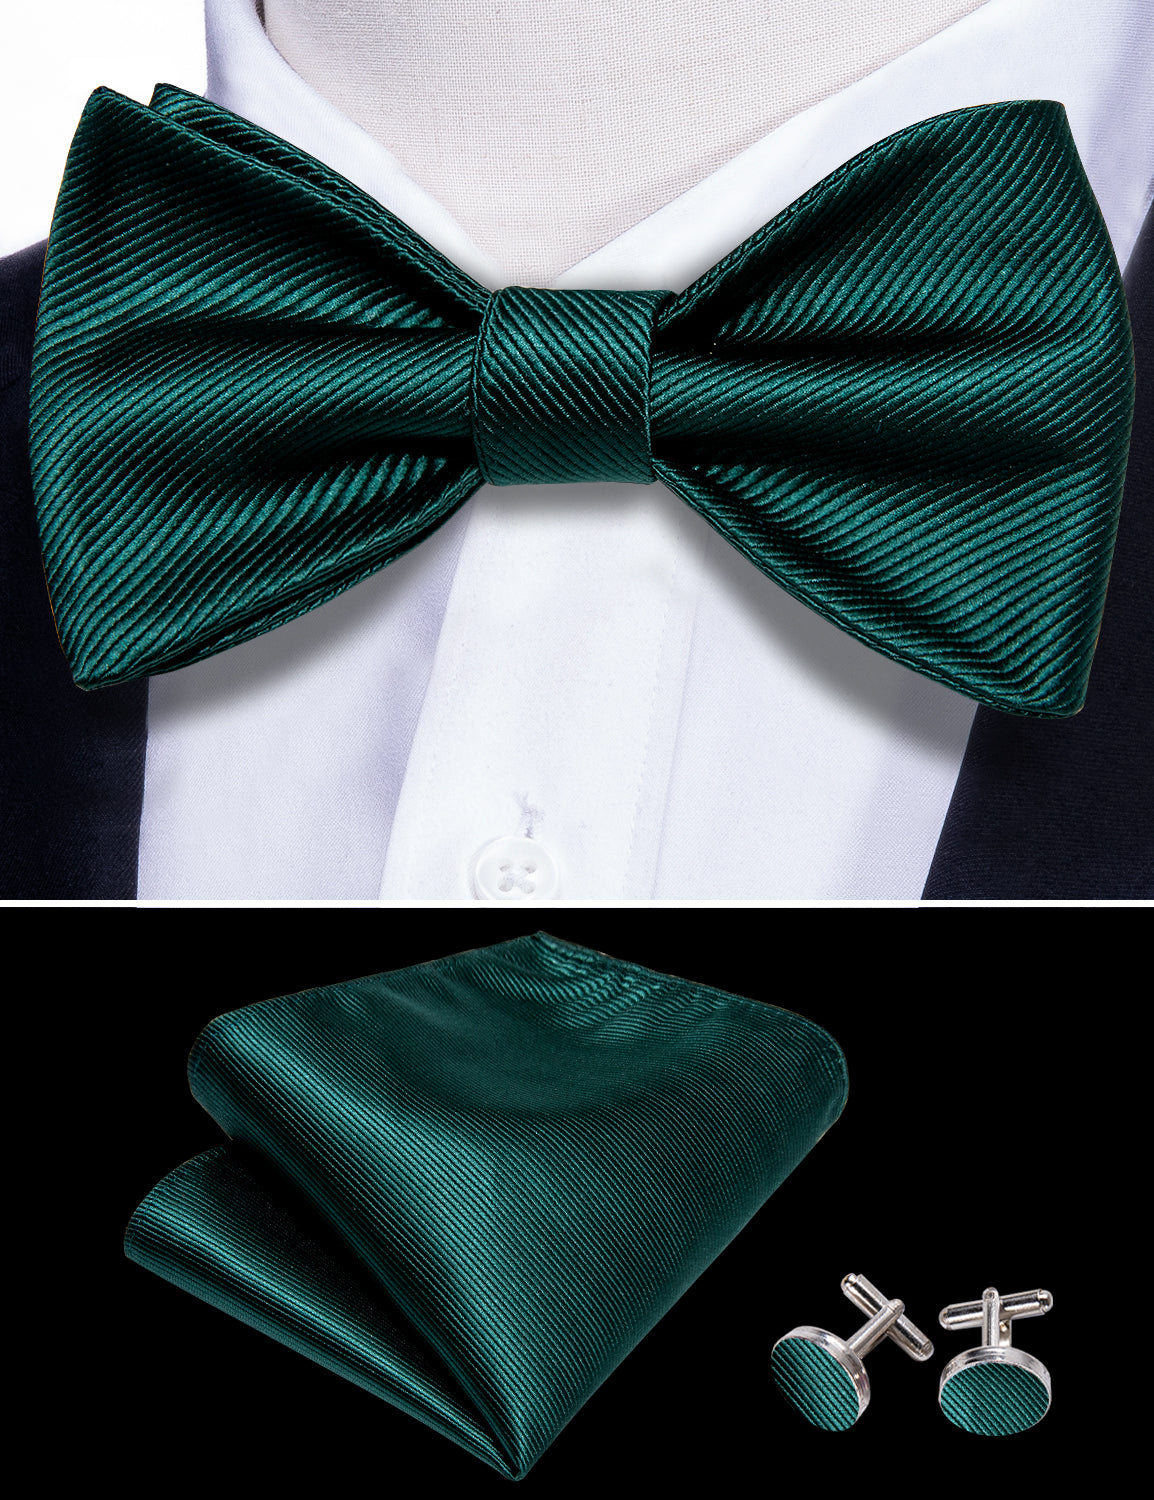 Green Self Tie Bow Tie Hanky Cufflinks Set